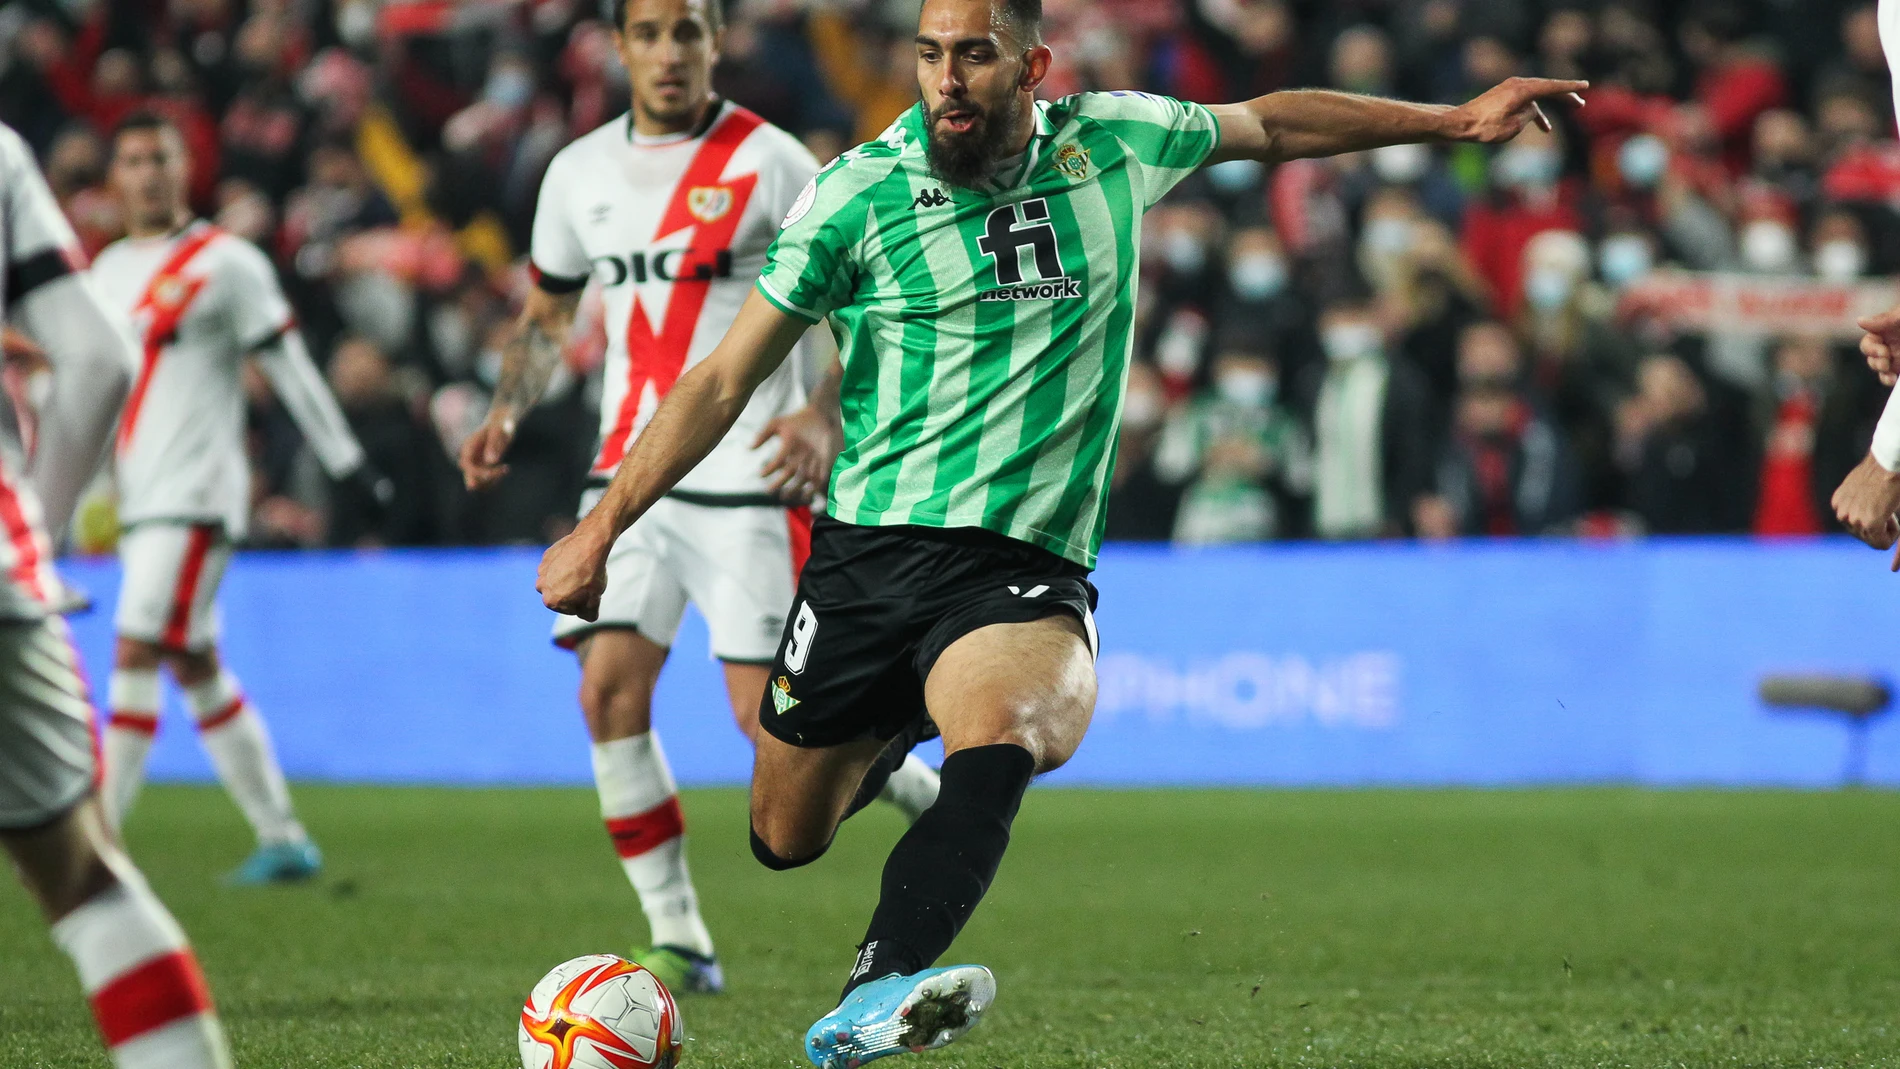 Borja Iglesias remata para marcar el primer gol del Betis